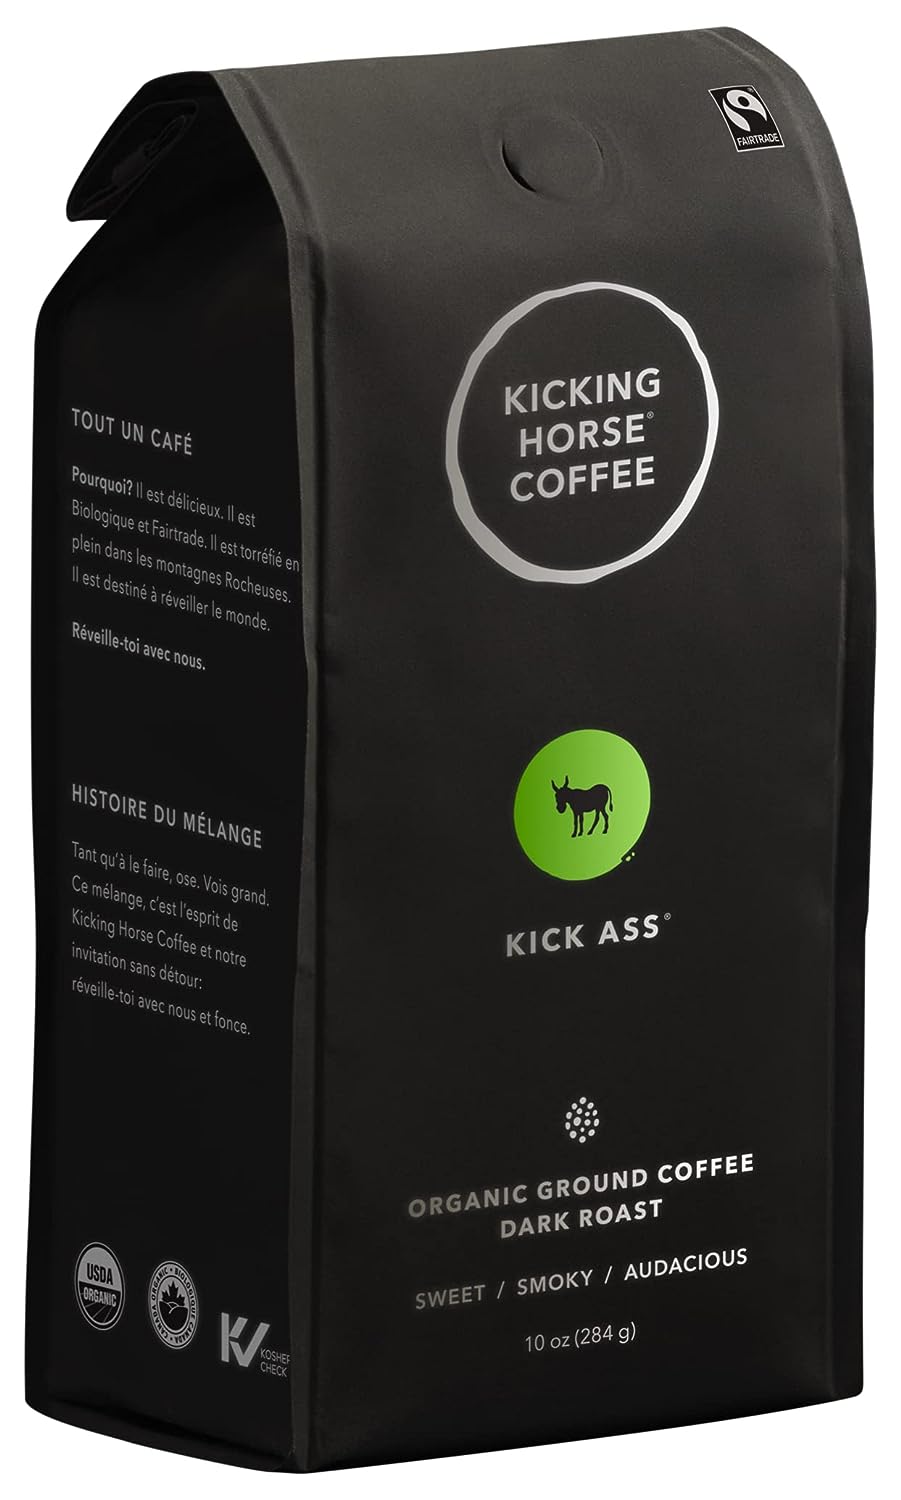 $4.94 w/ S&S: 10-Oz Kicking Horse Organic Ground Coffee (Dark Roast)